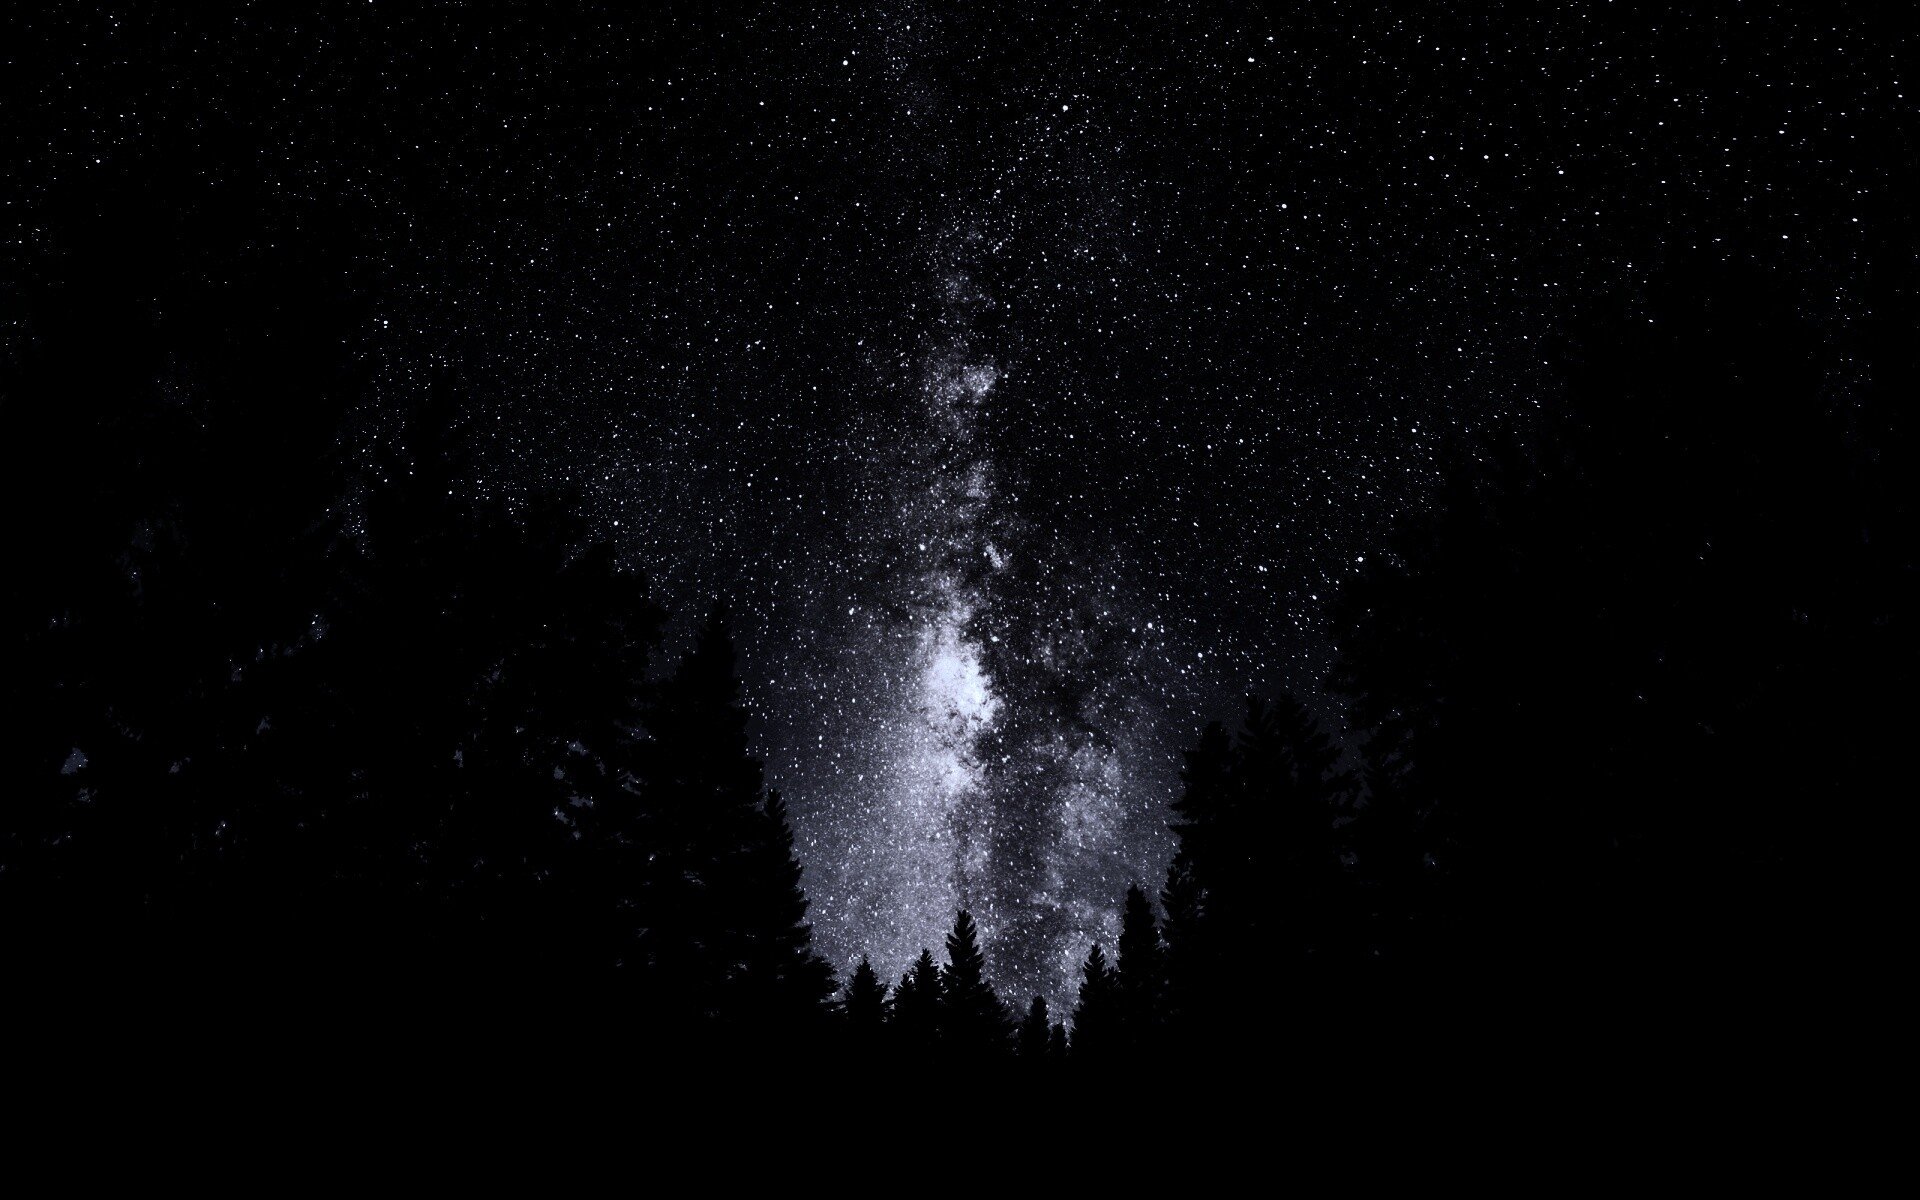 темное звездное небо картинки